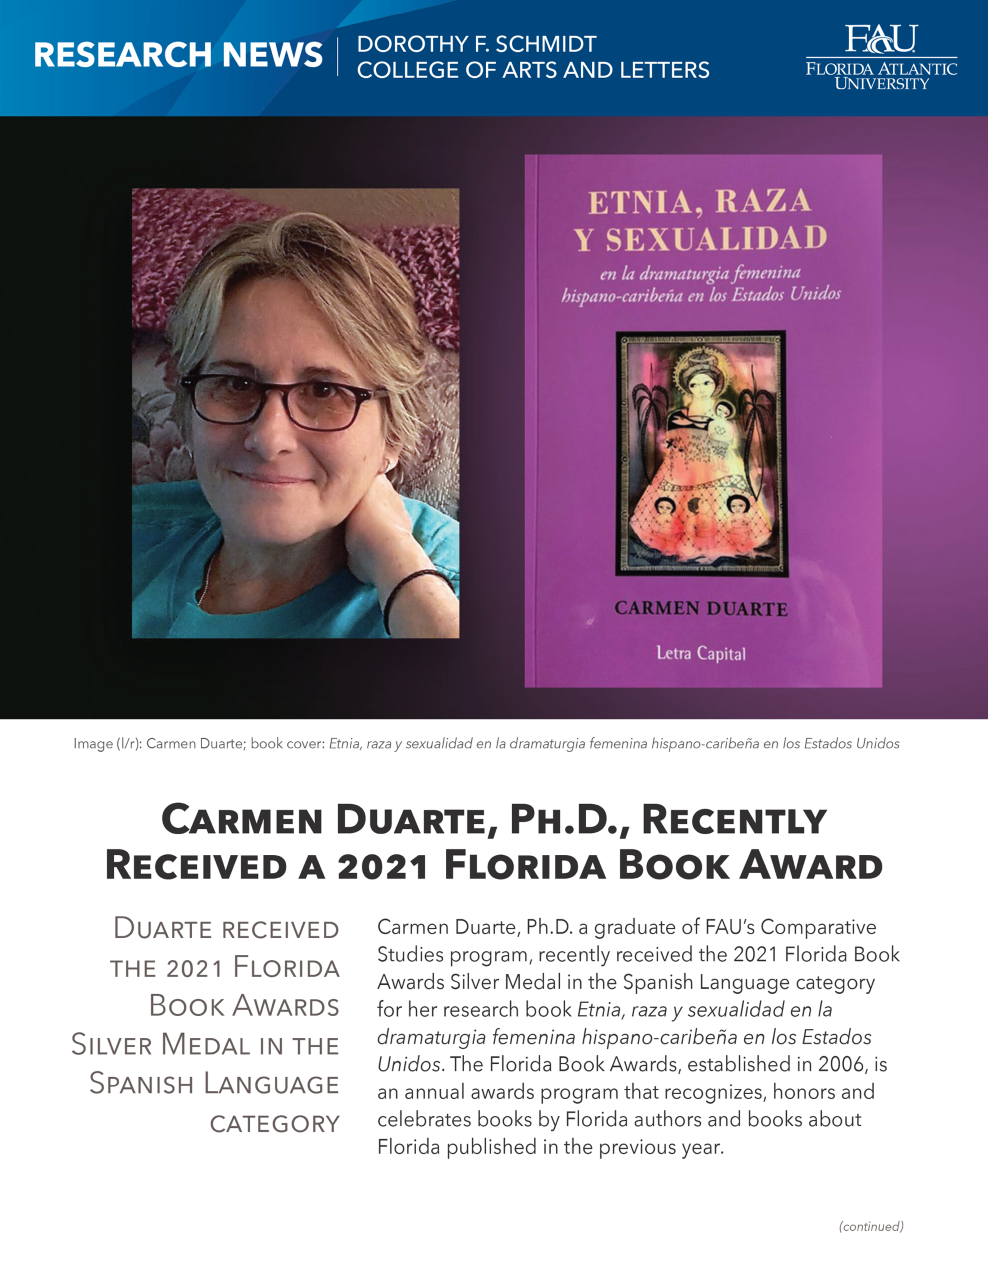 Recent Comparative Studies Program Graduate, Carmen Duarte, Receives Florida Book Award